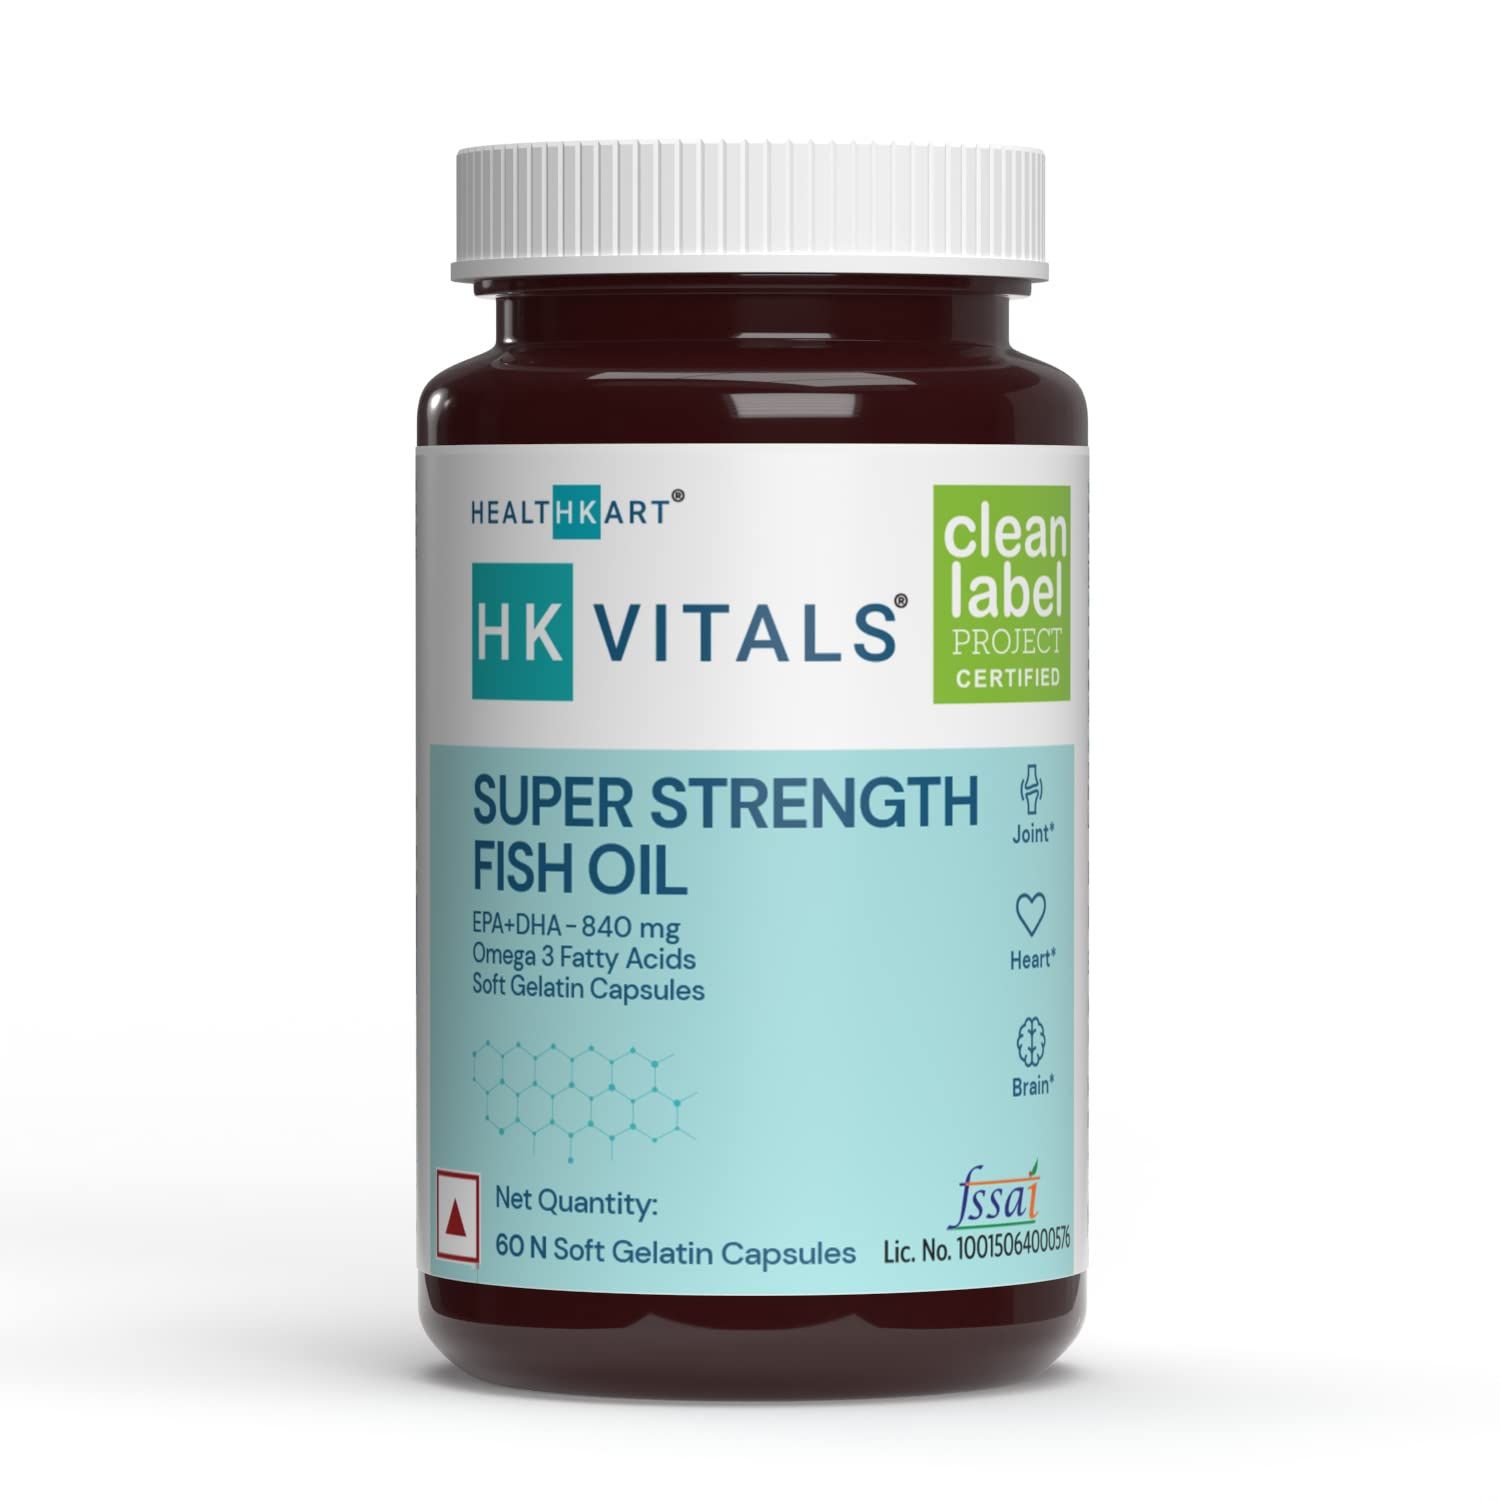 HK Vitals Super Strength Fish Oil Supplement Image